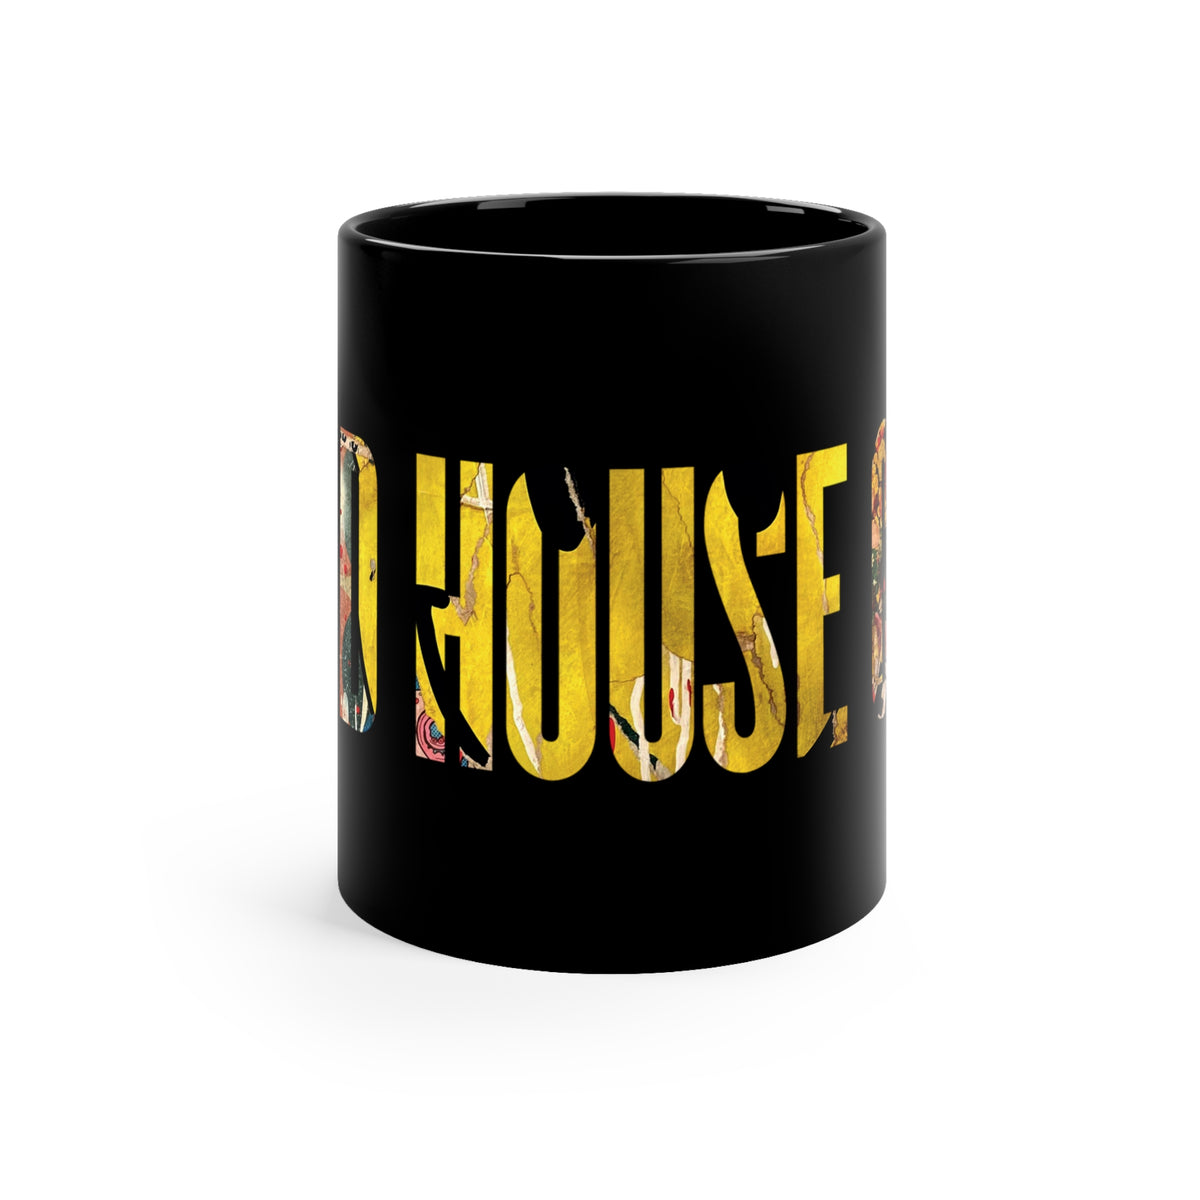 'Acid House Guy' Mug - Black